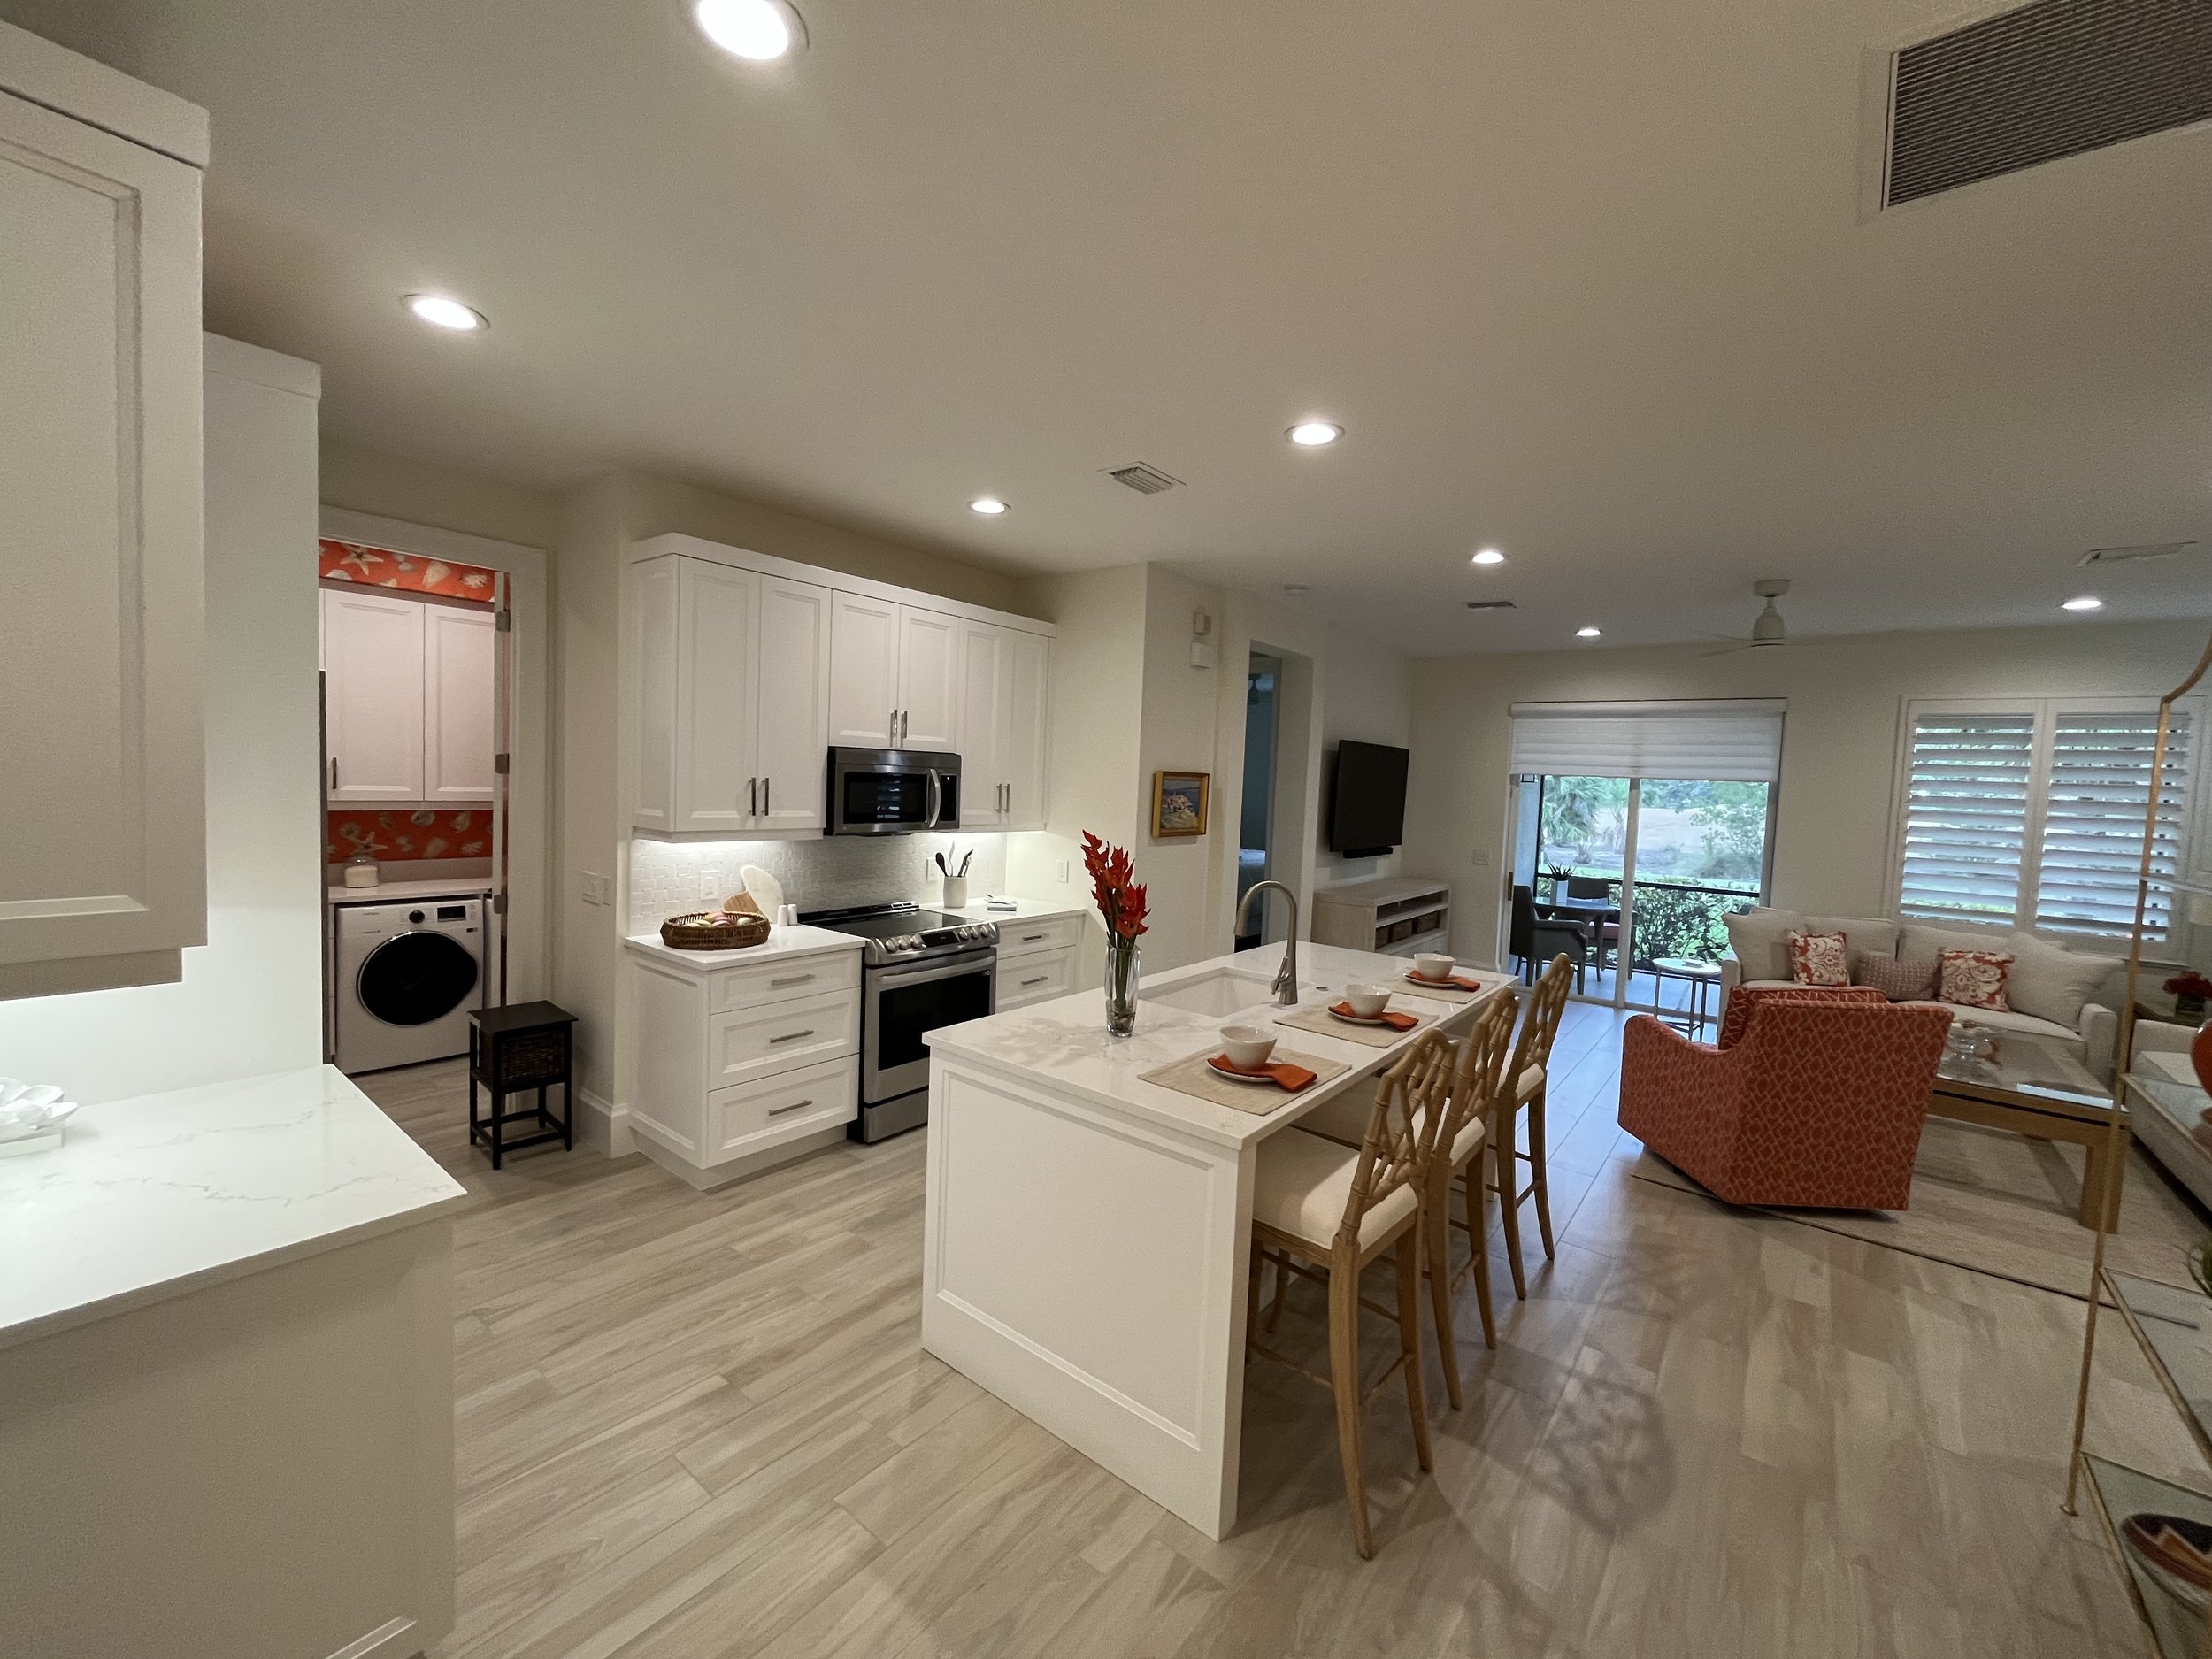 Kitchen - Custom cabinets - Bosch - island - porcelain - backsplash - laundry room - condo living - efficient space - subzero.jpg